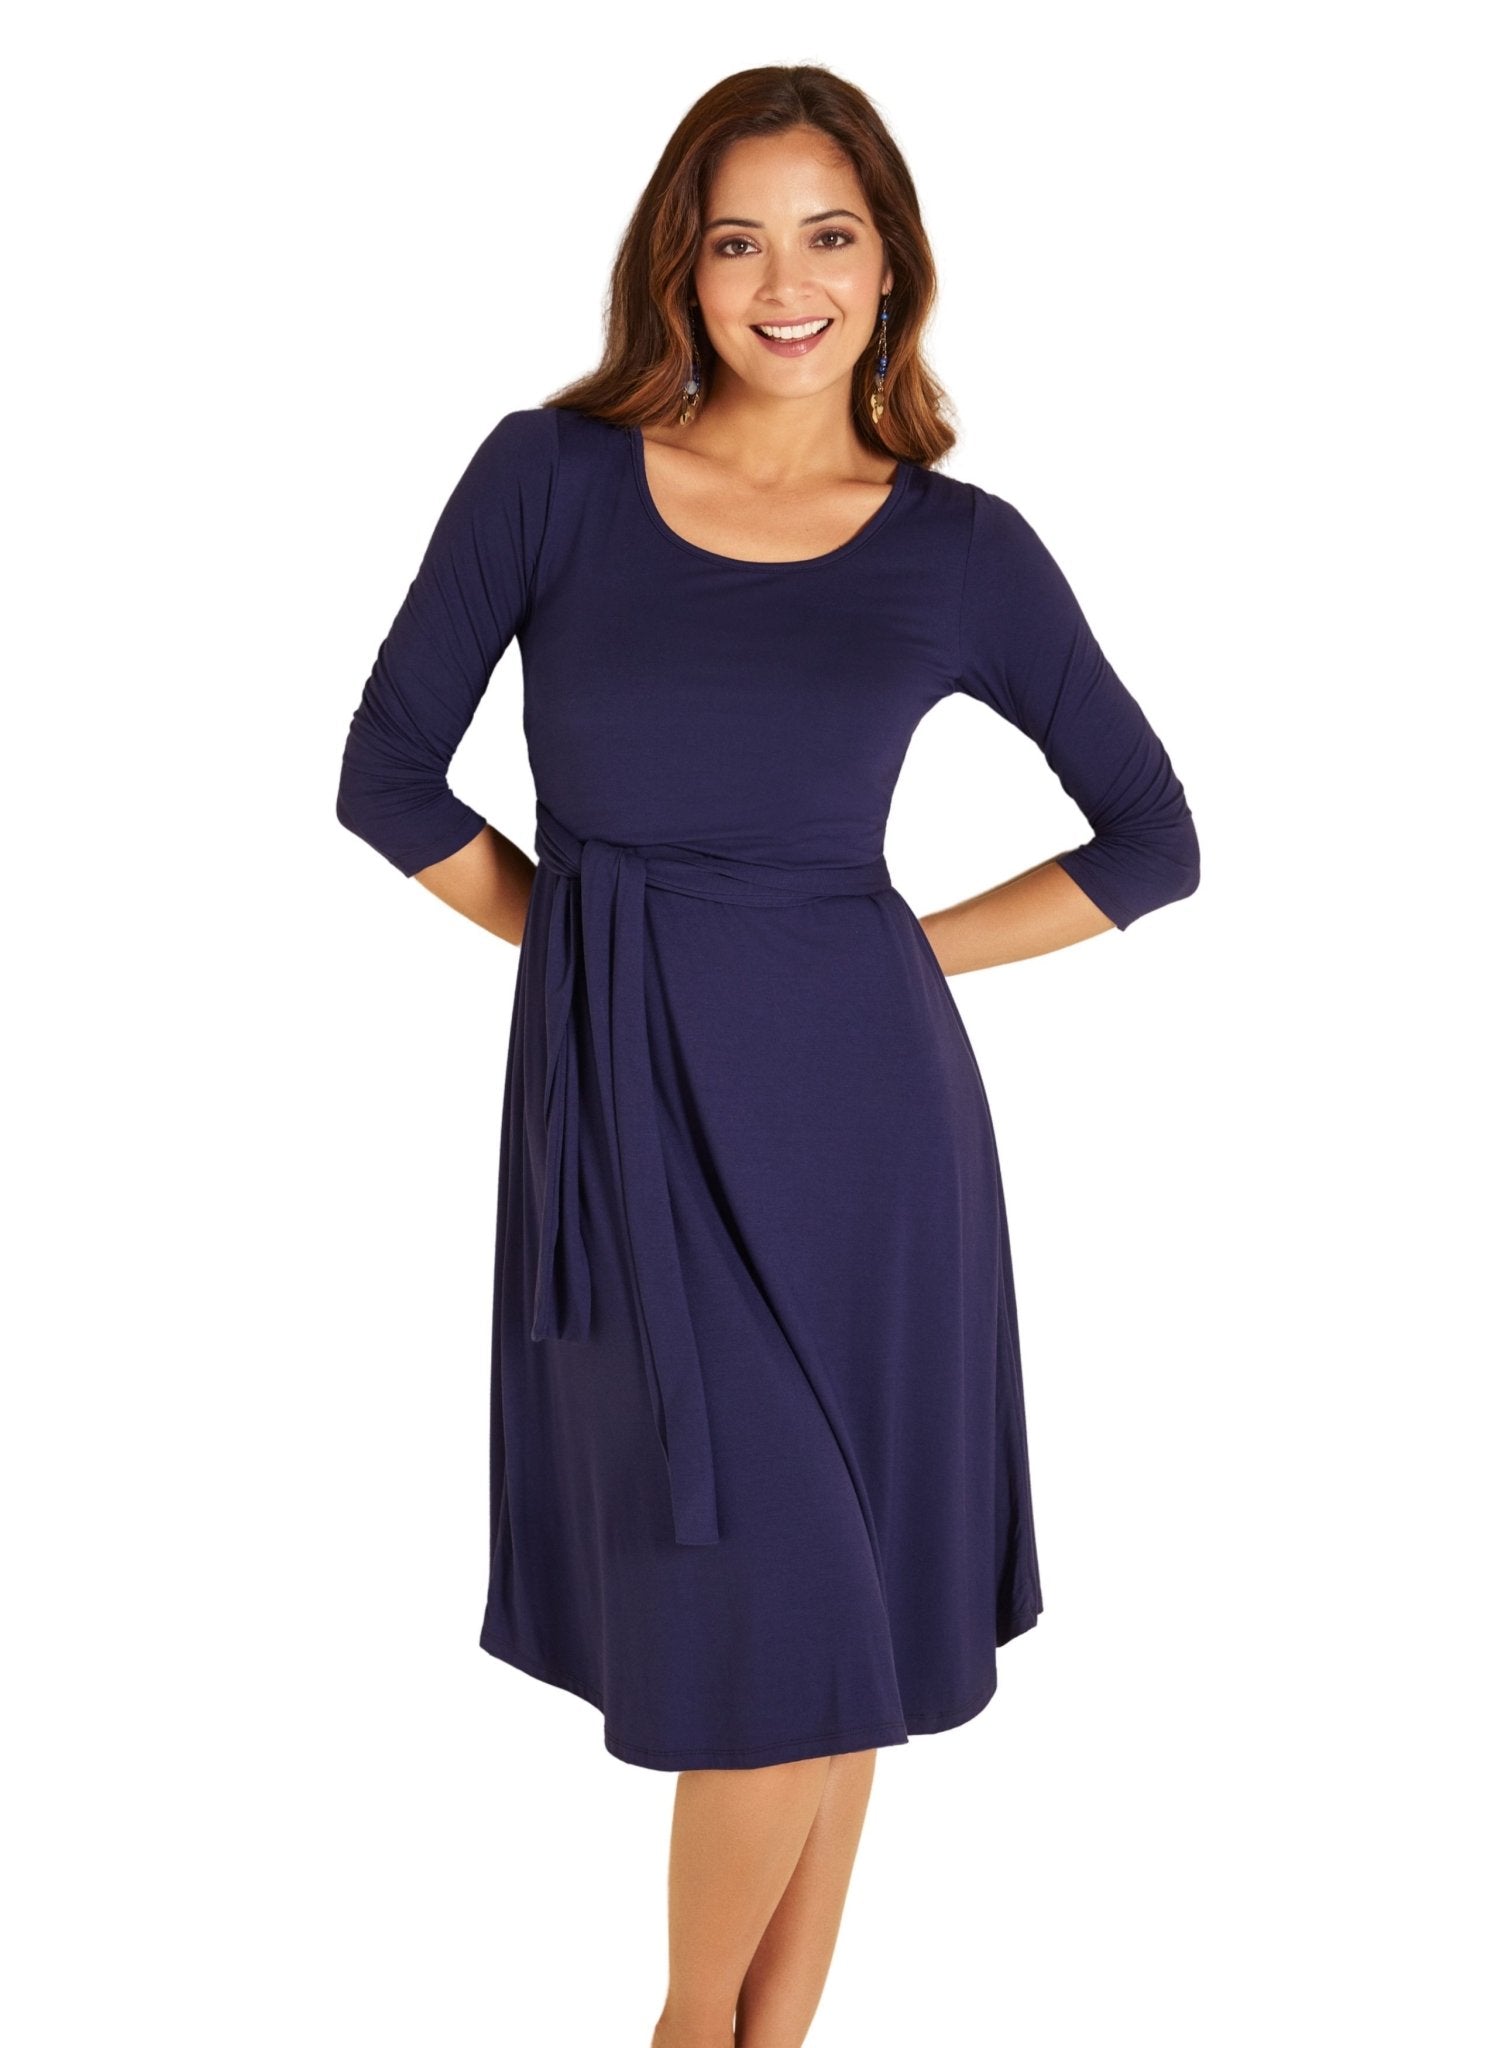 Naomi Maternity & Nursing Dress - Eclipse Blue - Mums and Bumps